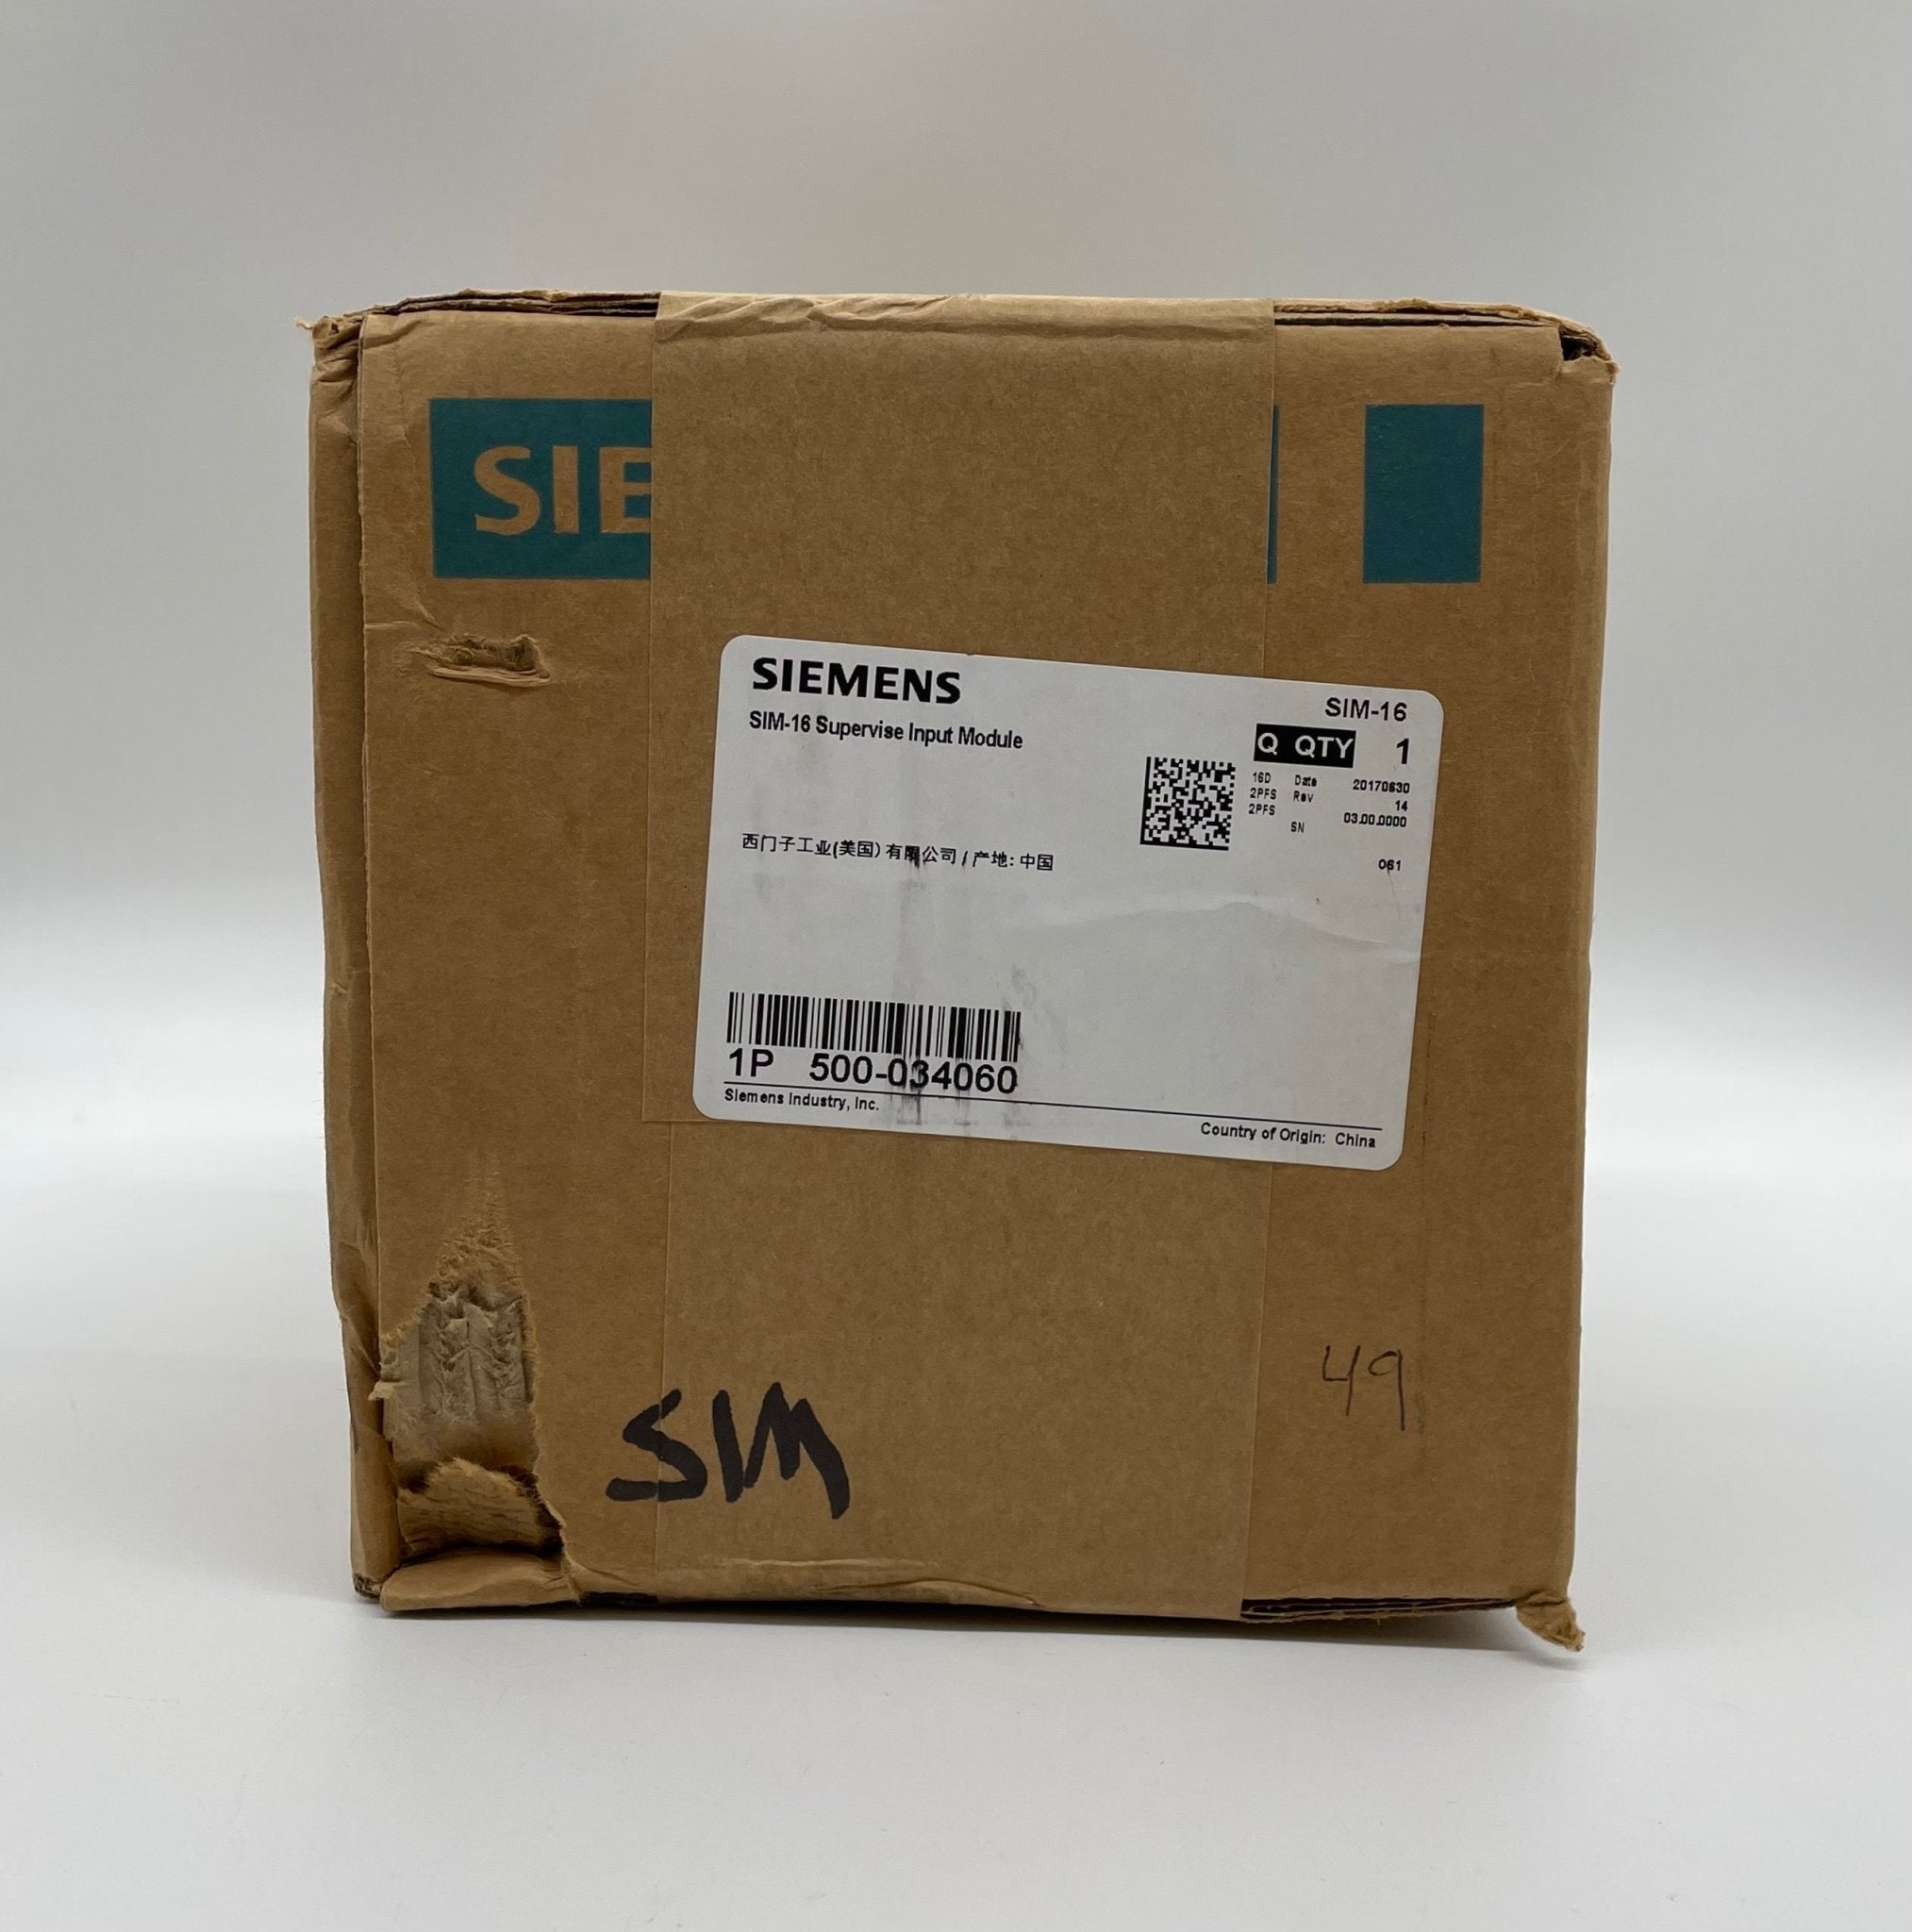 Siemens SIM-16 - The Fire Alarm Supplier